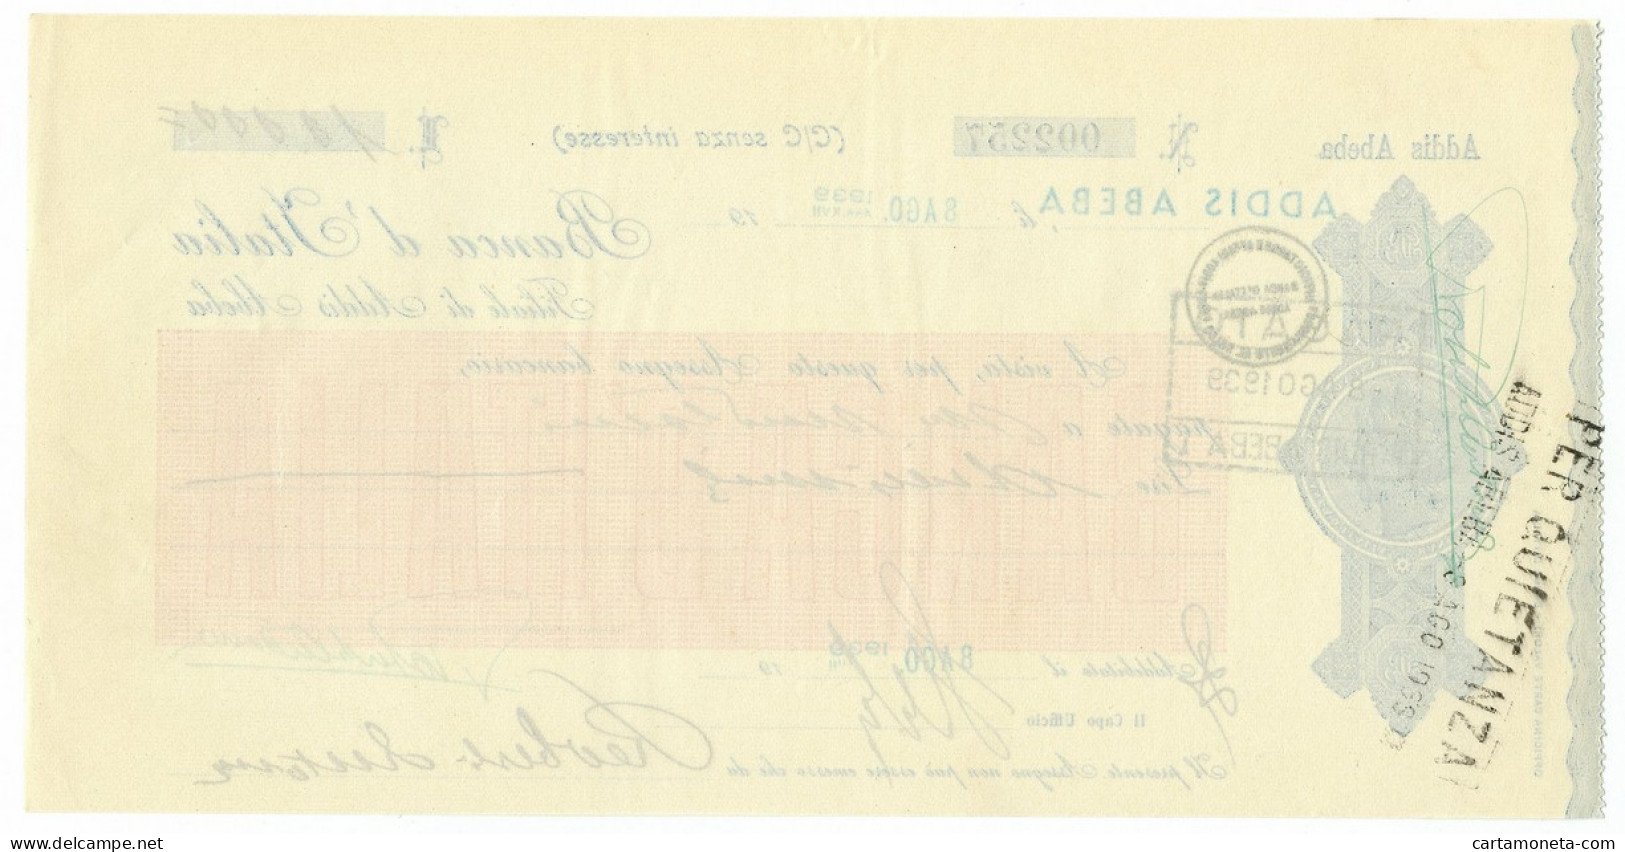 10000 LIRE ASSEGNO BANCA D'ITALIA FILALE ADDIS ABEBA MOD. ROSSO 08/08/1939 SUP - Africa Oriental Italiana